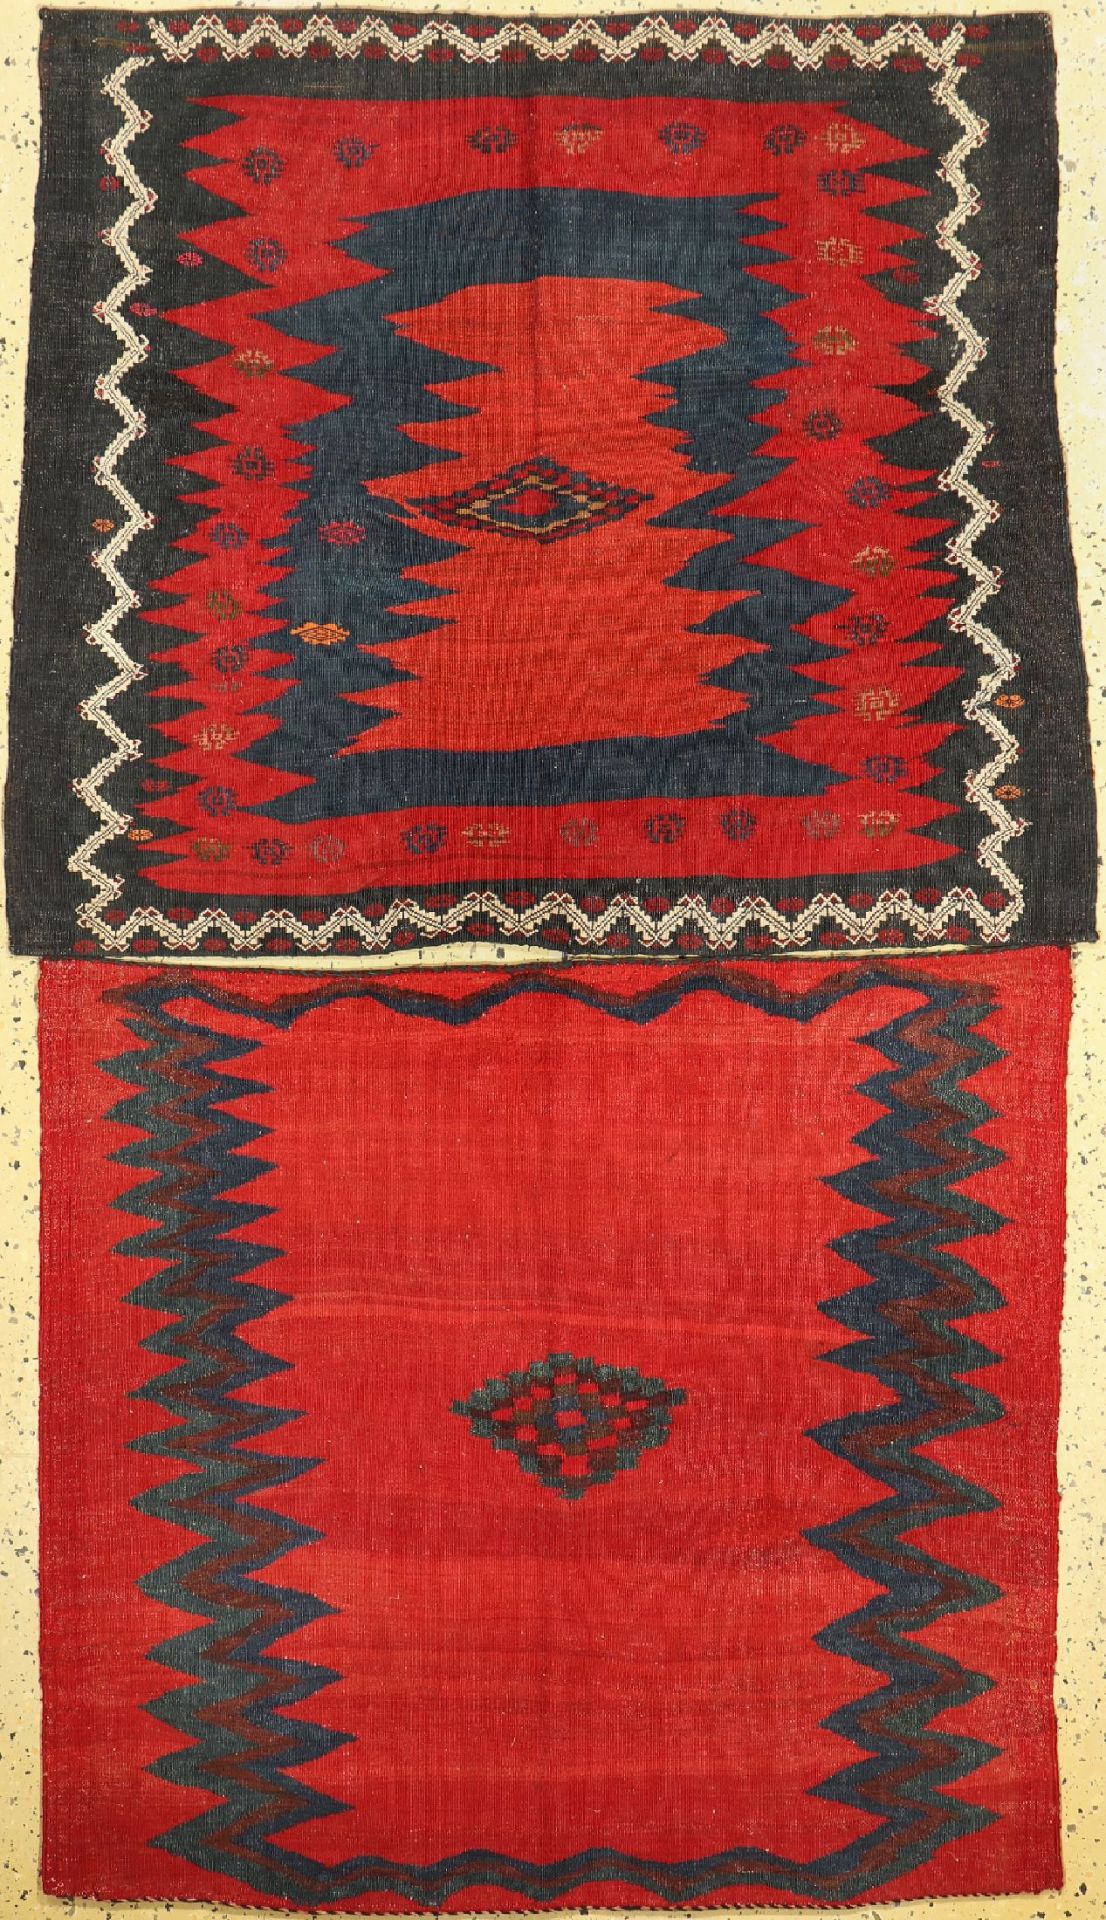 2 Sofreh, Persien, um 1900, Wolle auf Wolle, ca. 100 x